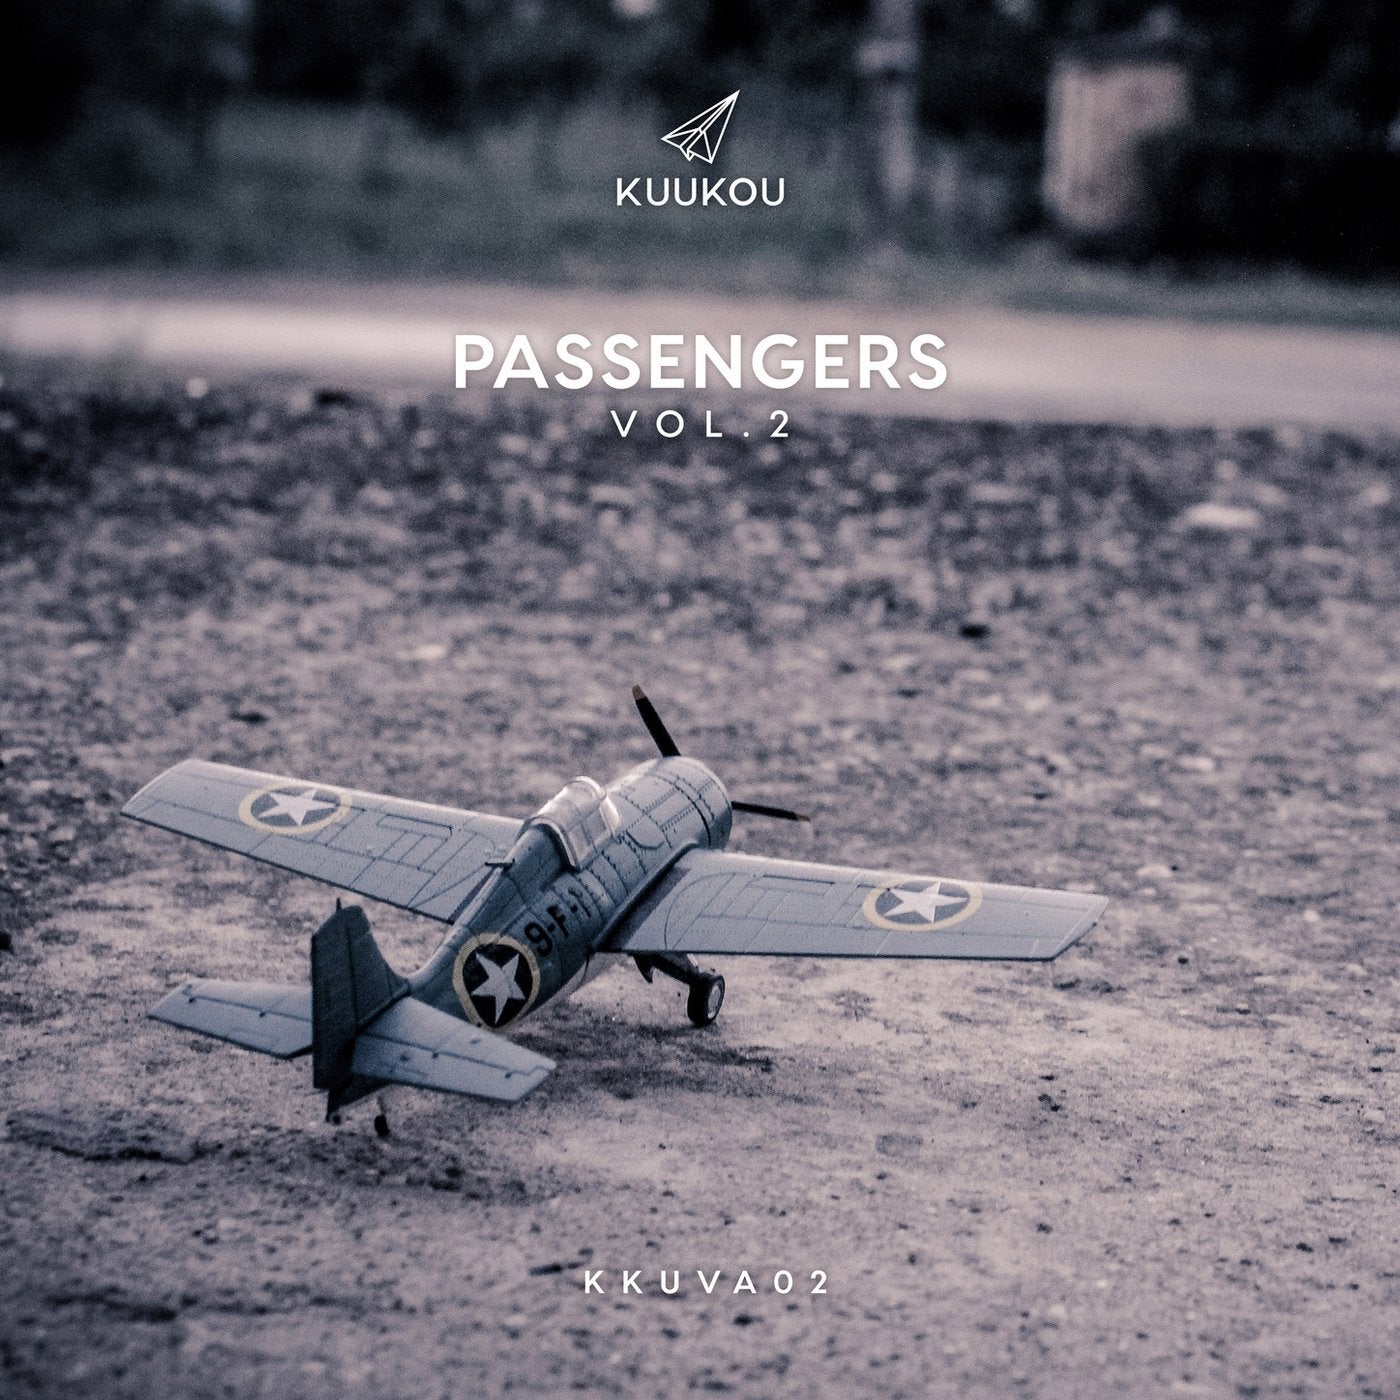 Passengers, Vol. 2